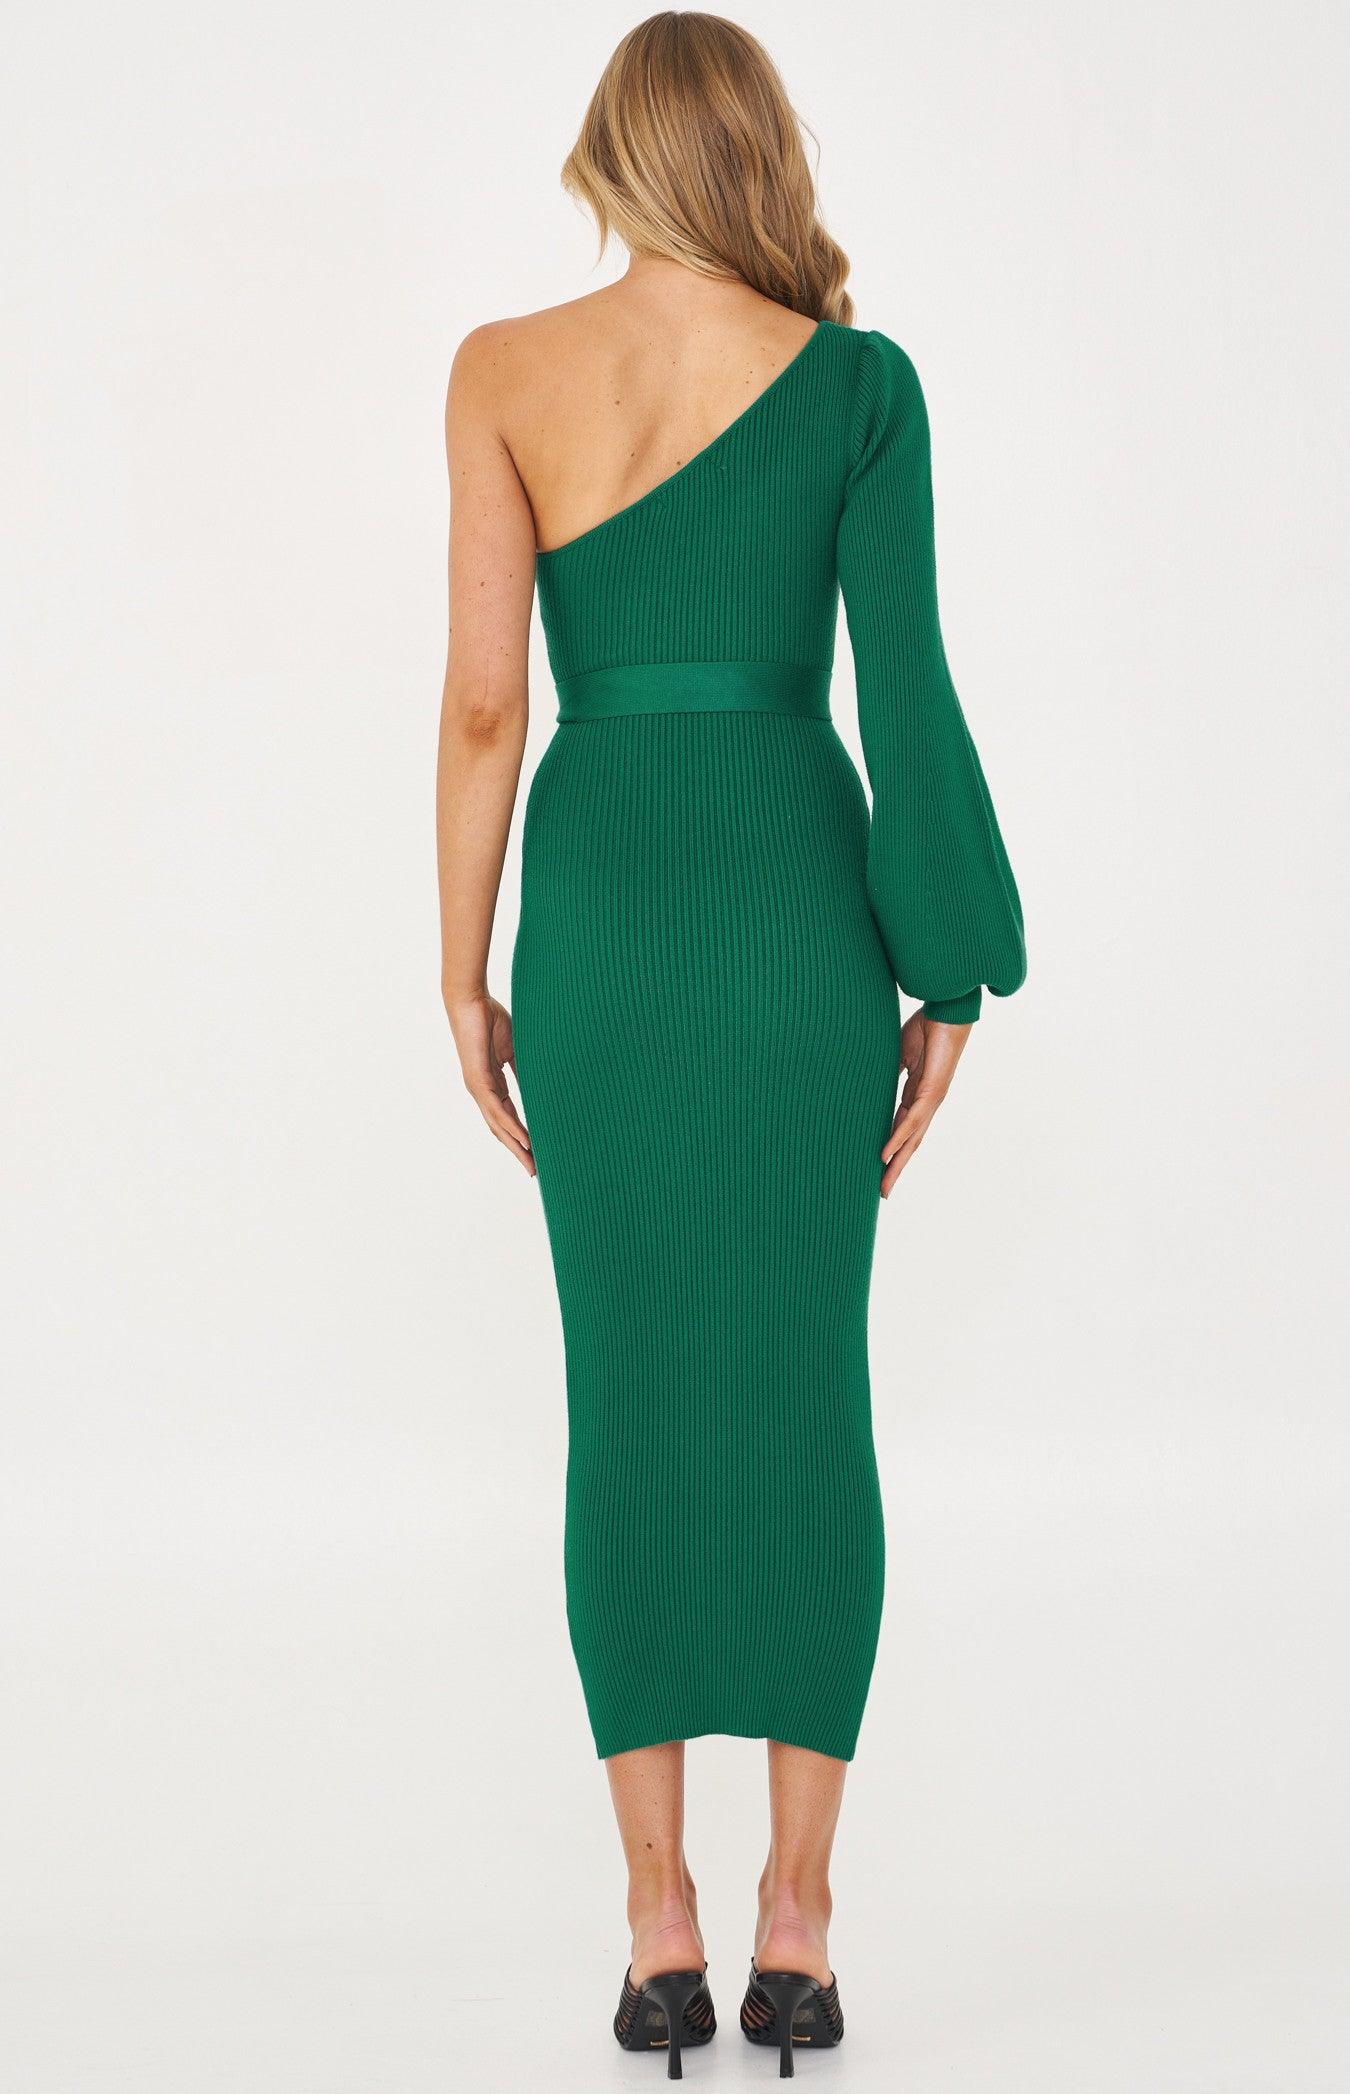 Merino One Shoulder Knit Dress - Emerald - JAUS